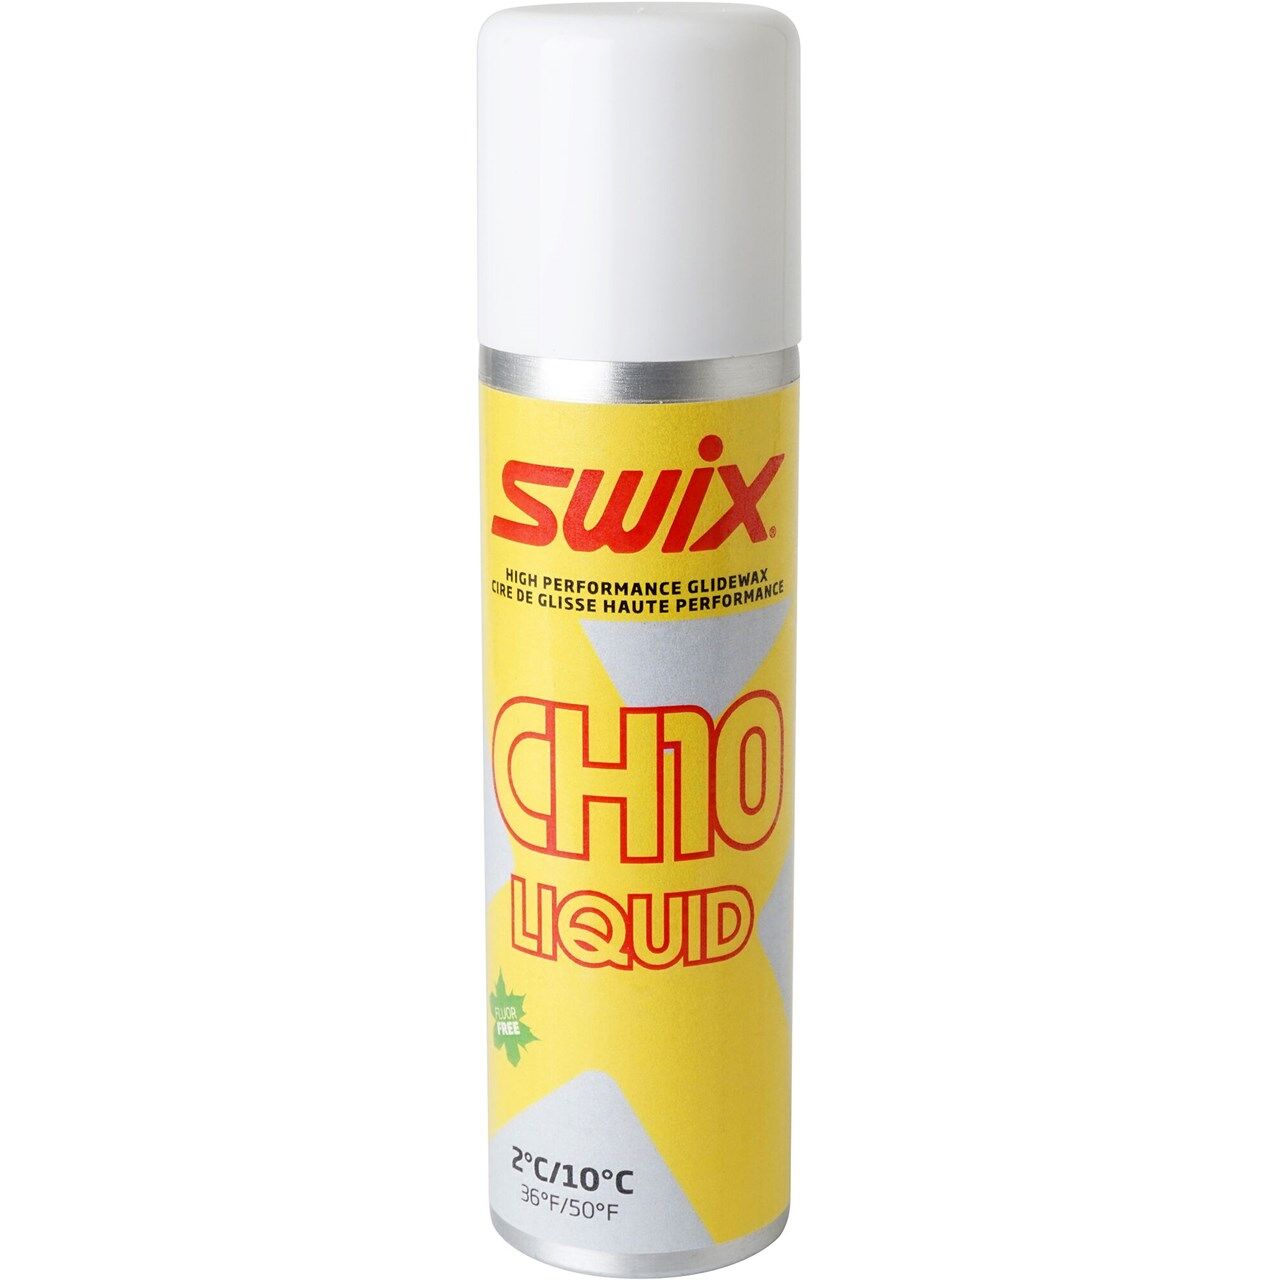 Swix CH10X Liquid 2C/10C (125ml) - Heisswachs